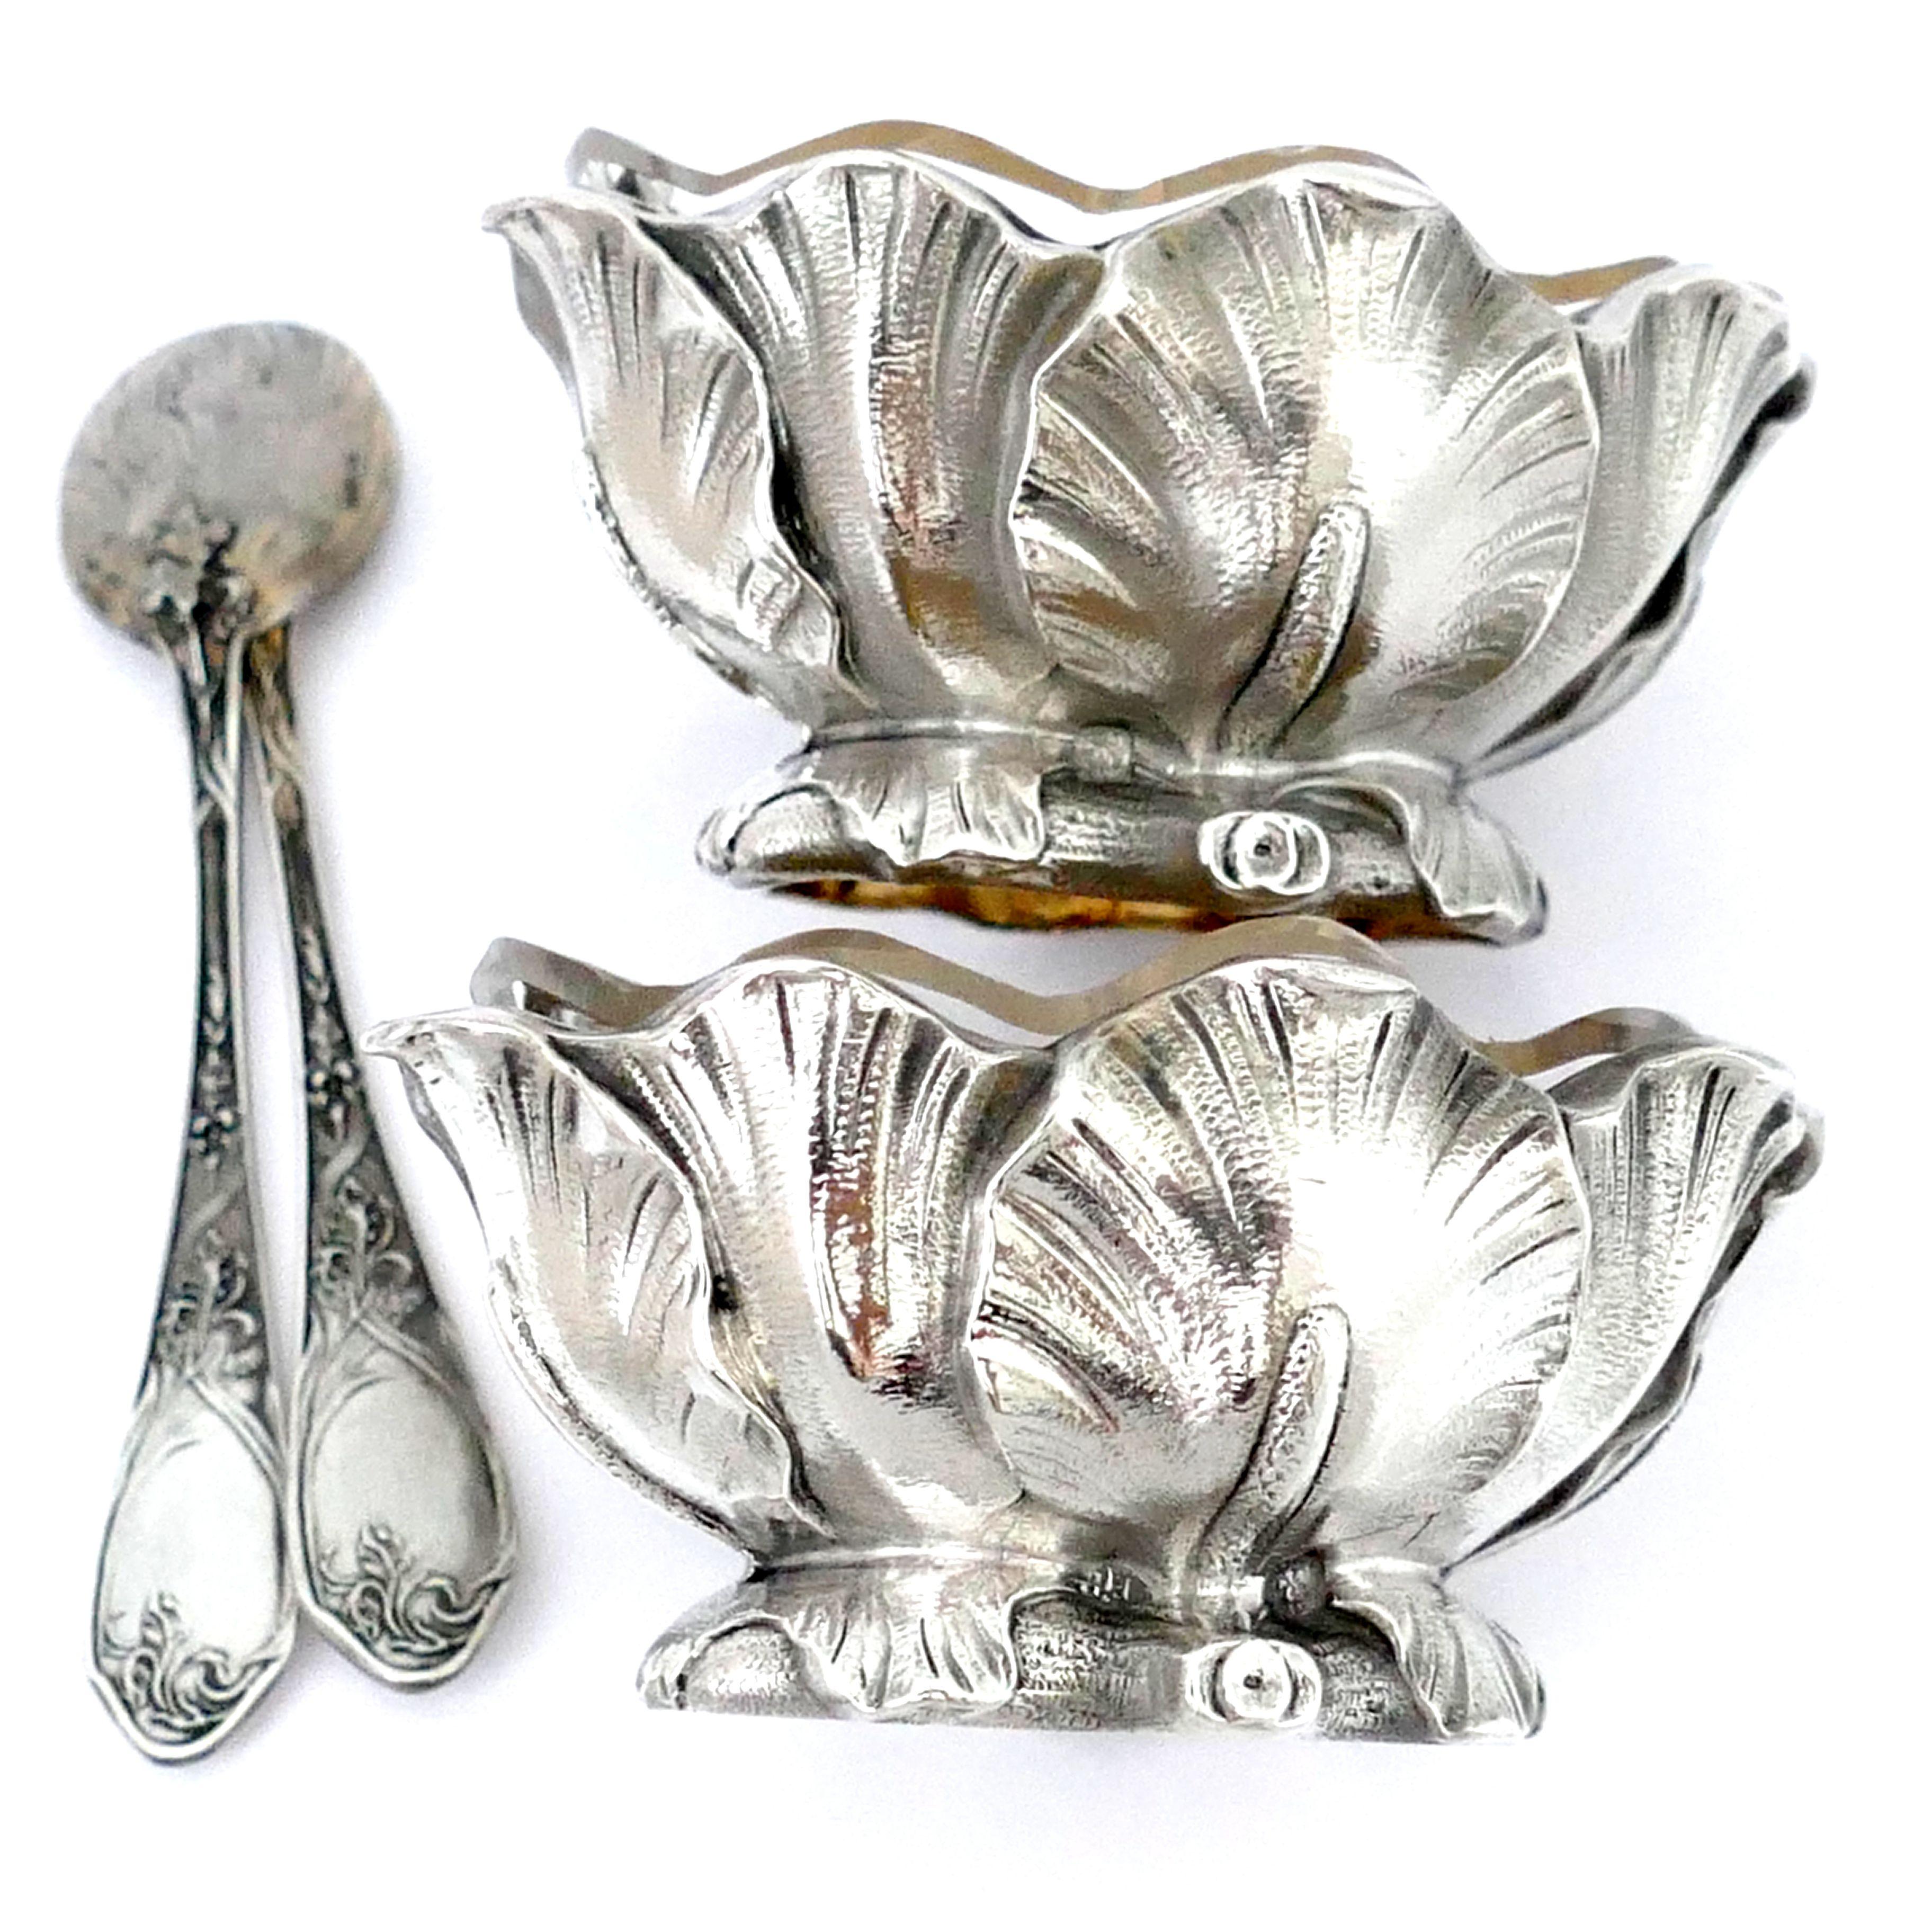 Art Nouveau Puiforcat Rare French Sterling Silver Salt Cellars Pair with Spoons, Iris